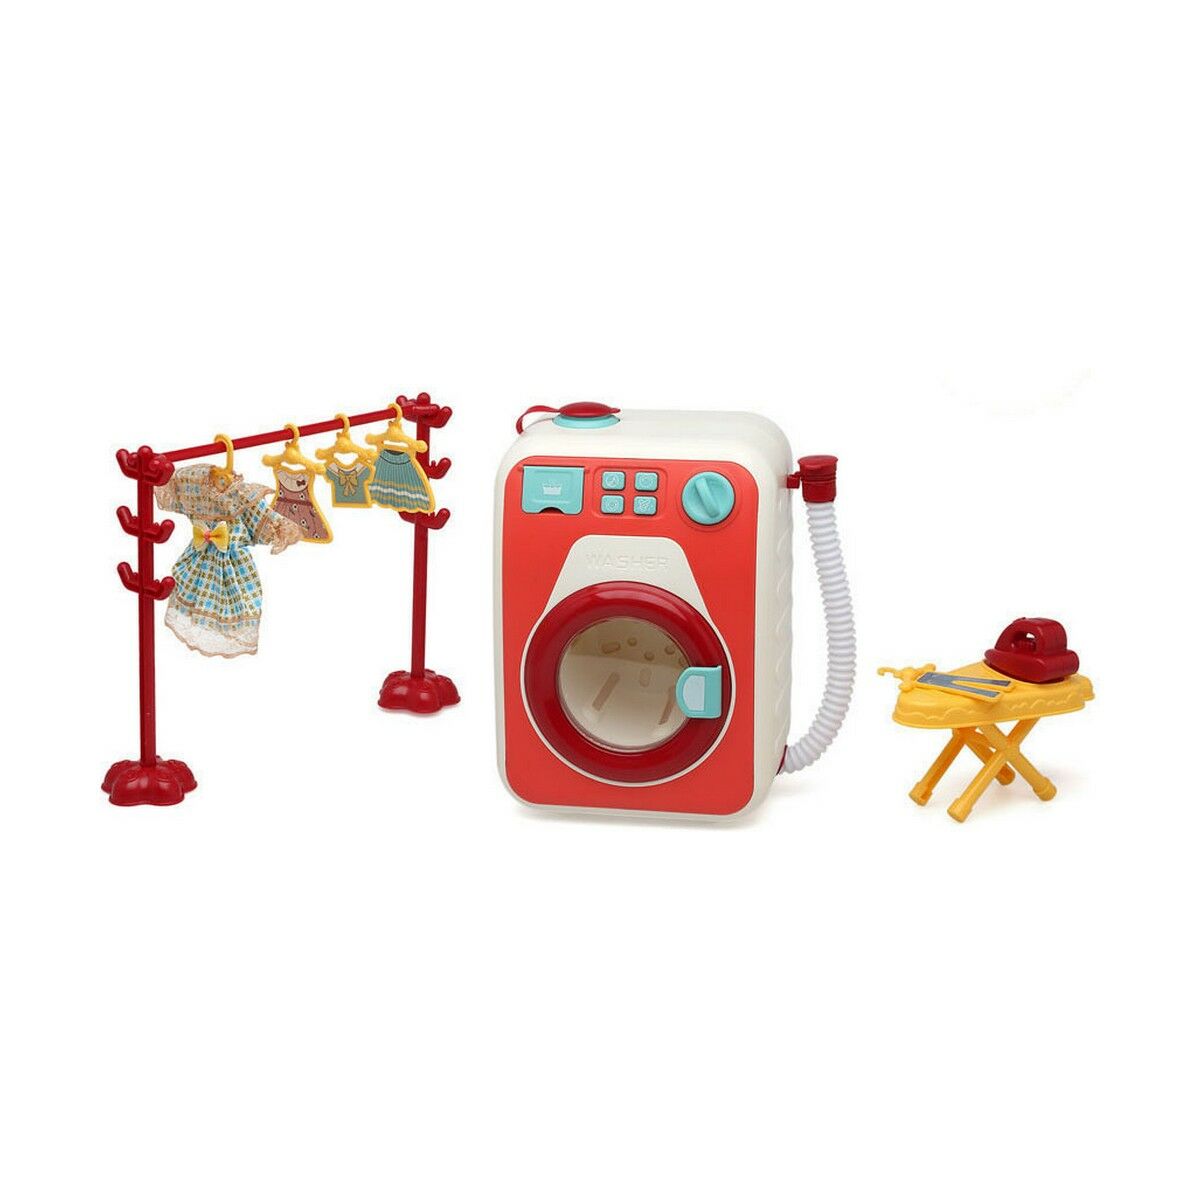 Toy washing machine Electric Toy 43 x 28 cm - Little Baby Shop